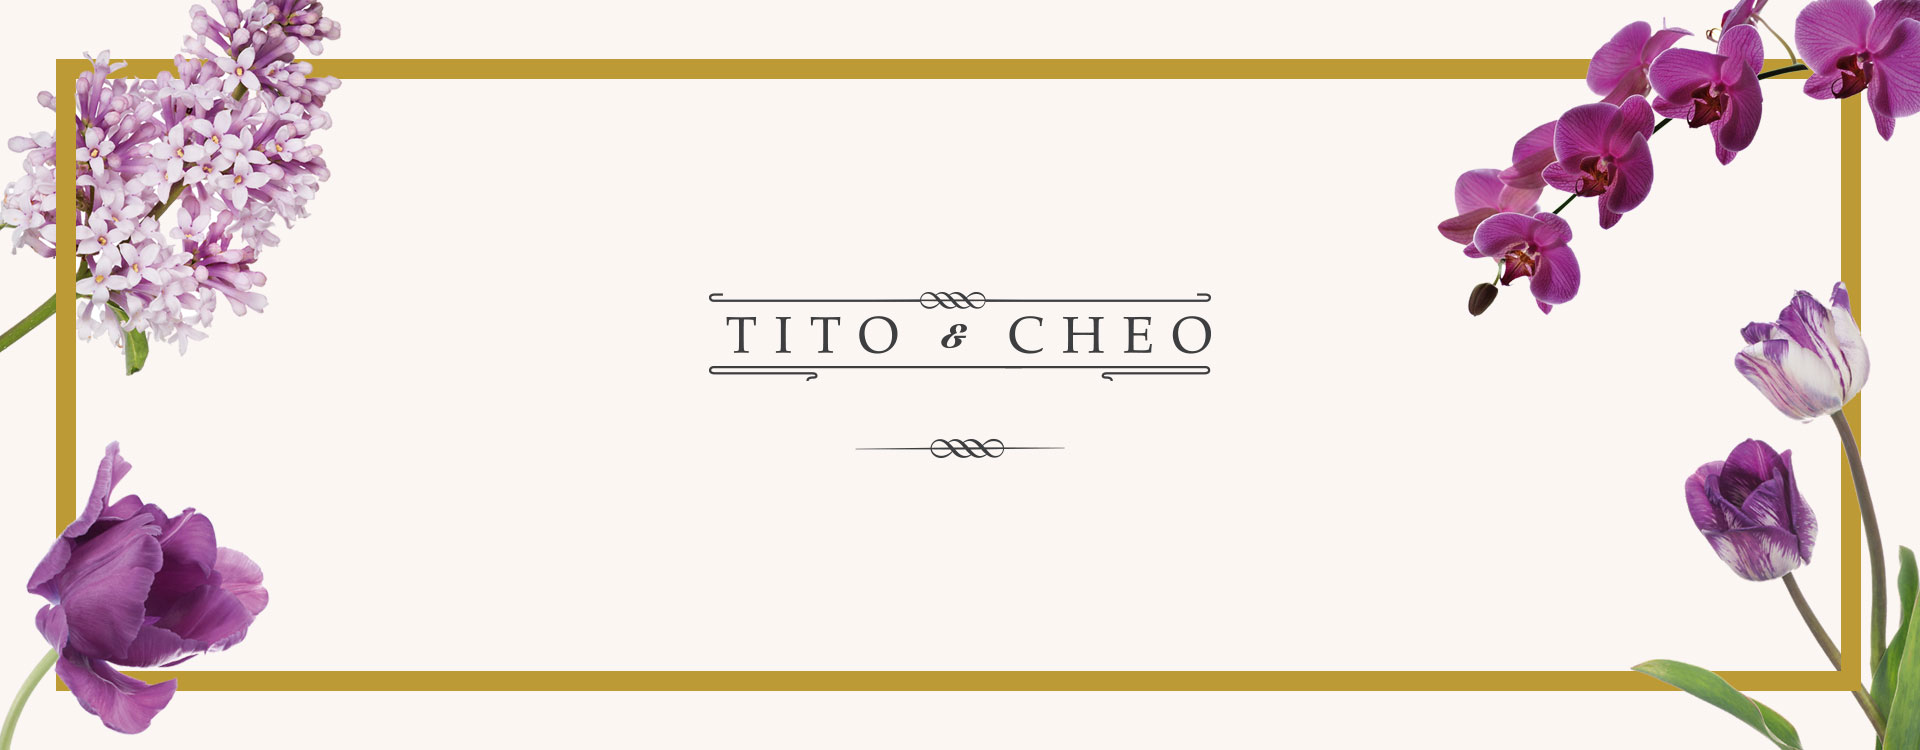 Tito & Cheo Skypixel